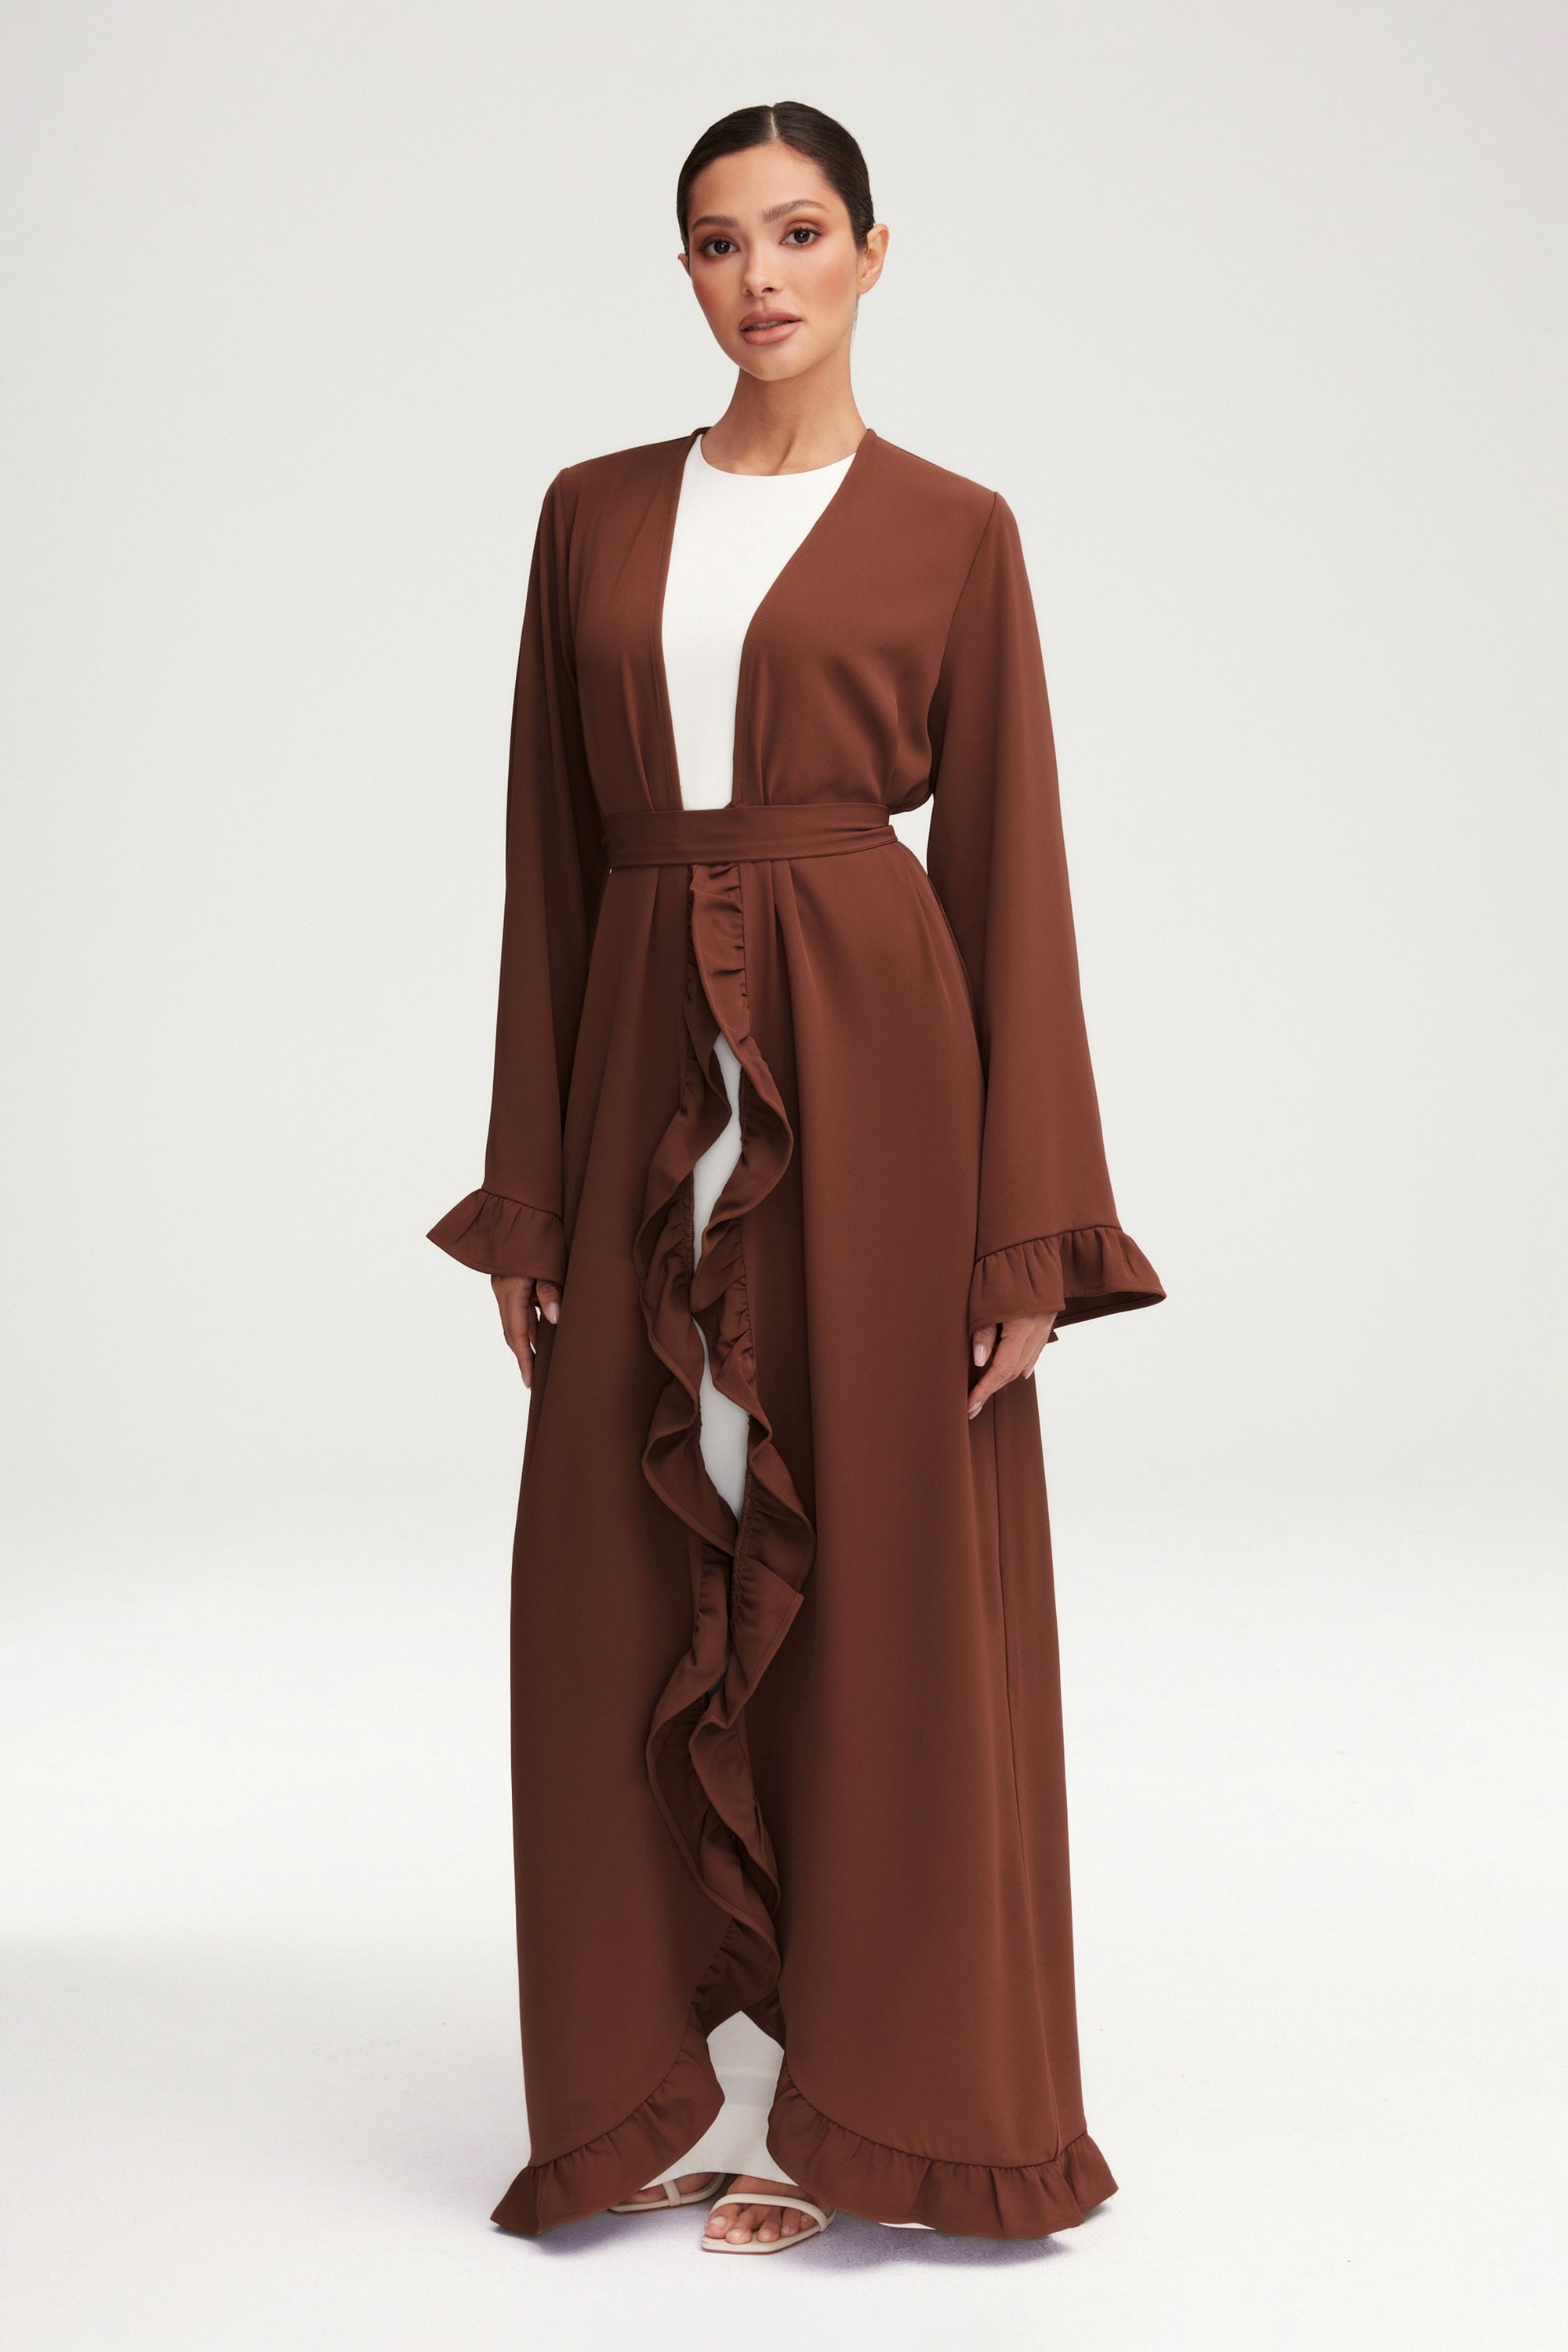 Mariam Ruffle Open Abaya - Chocolate Clothing Veiled 